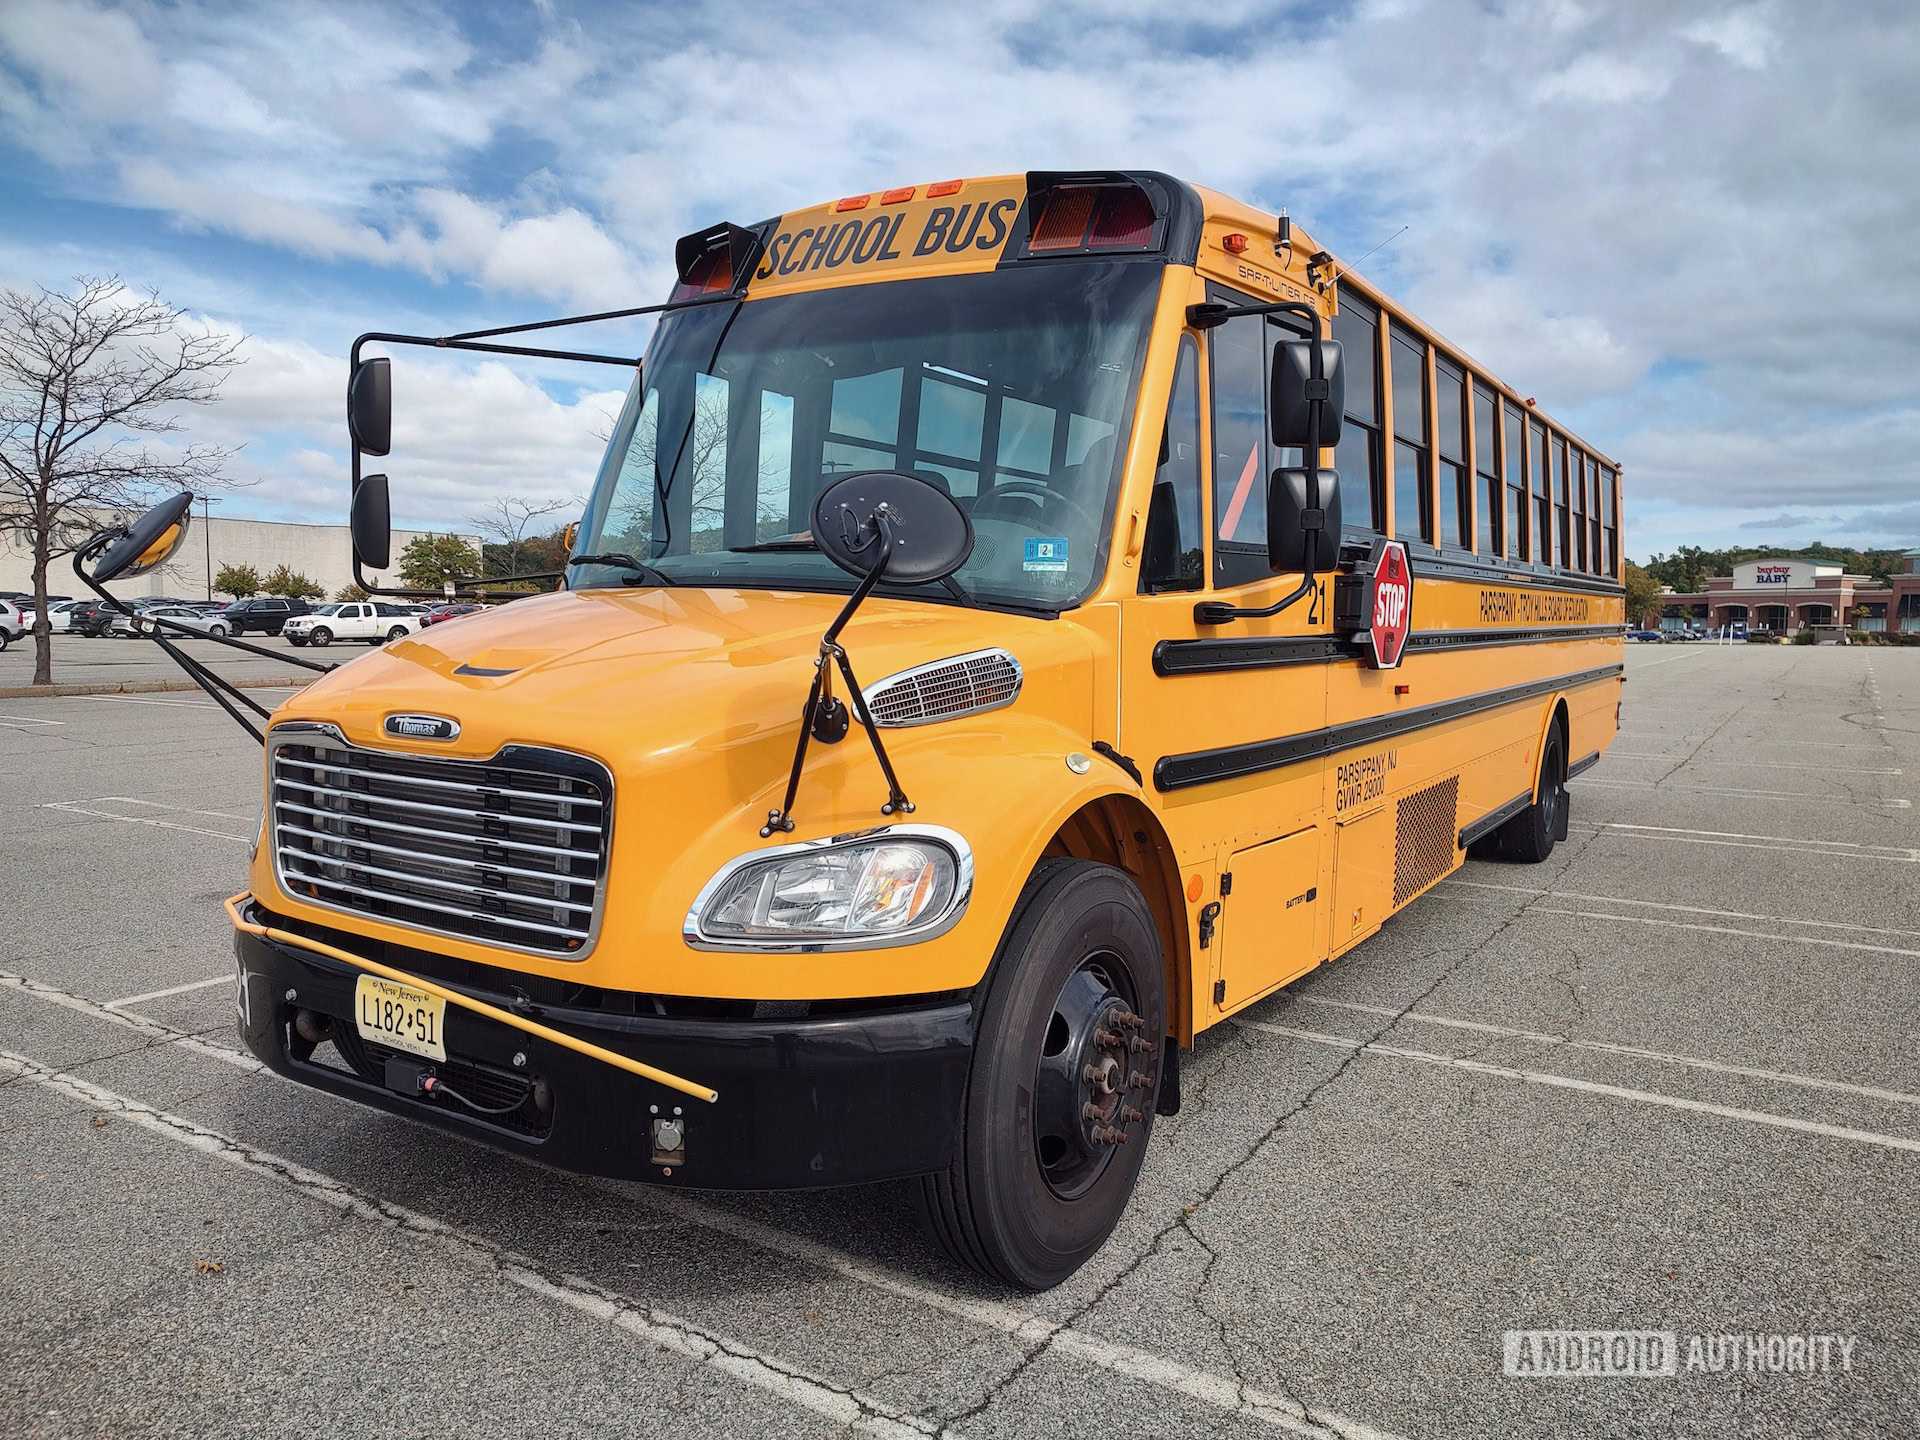 Motorola Edge 2021 photo sample school bus 1x